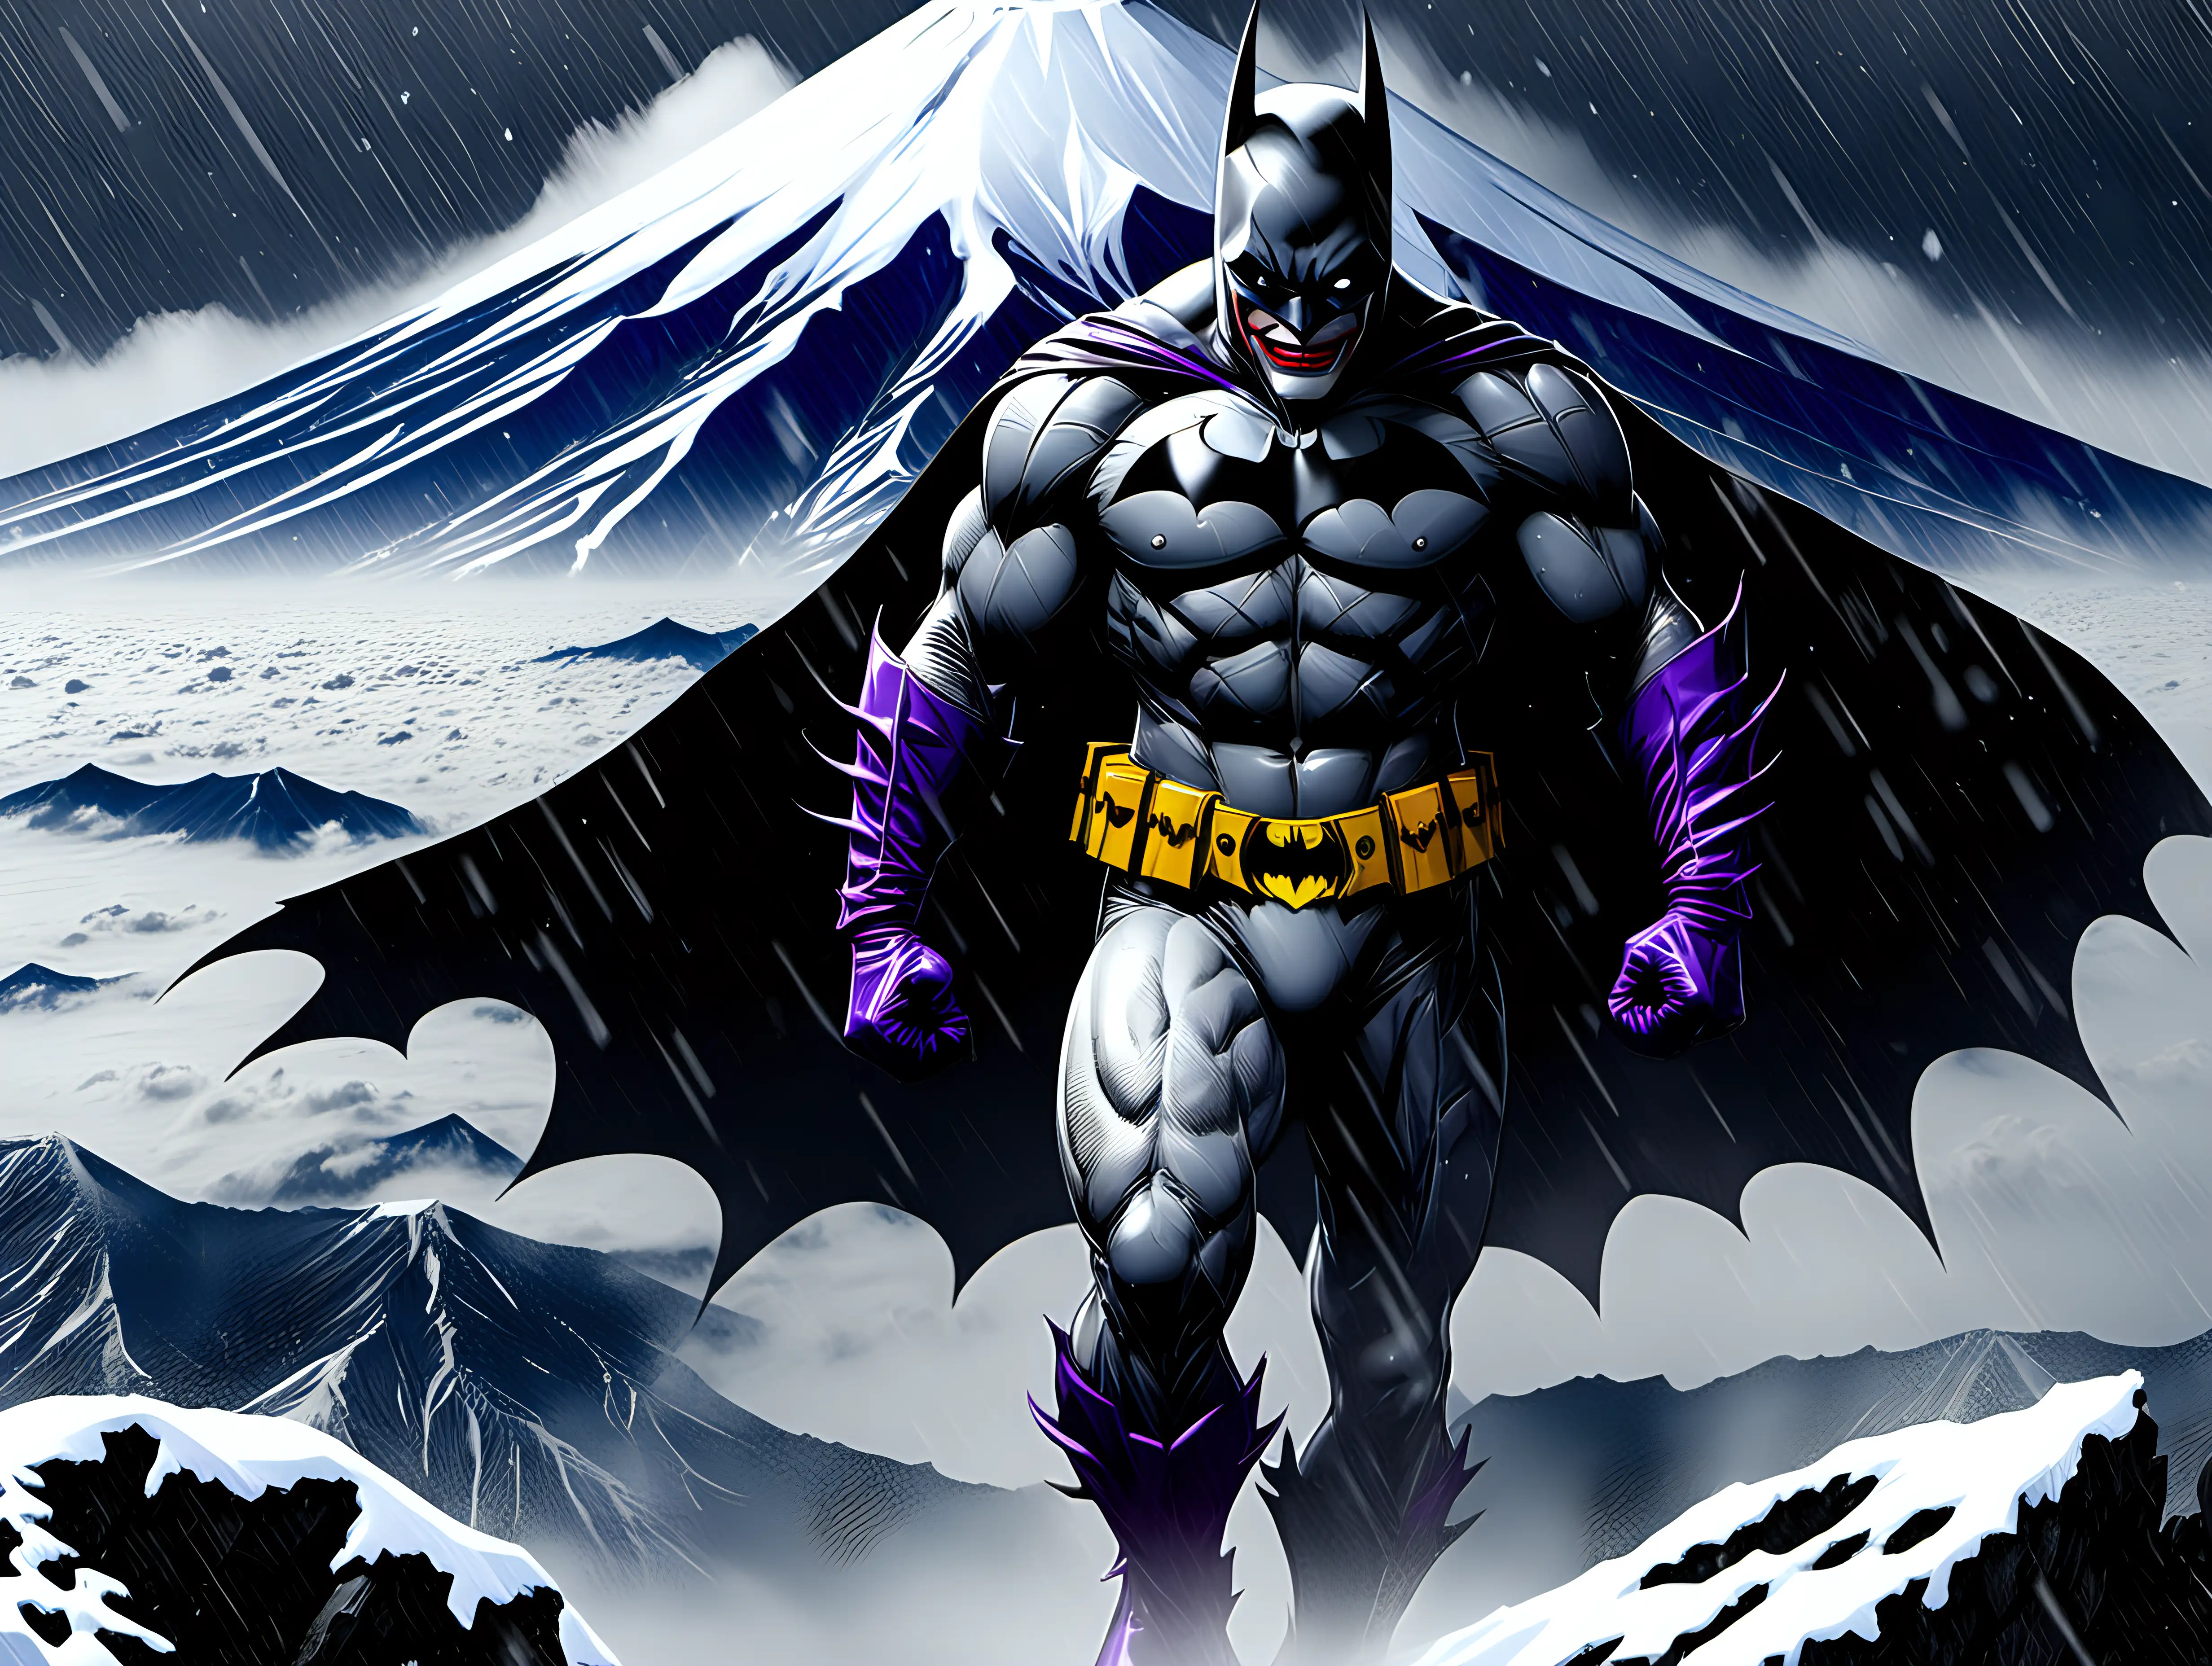 Batman and the Joker Climbing Mt Fuji in a Winter Storm